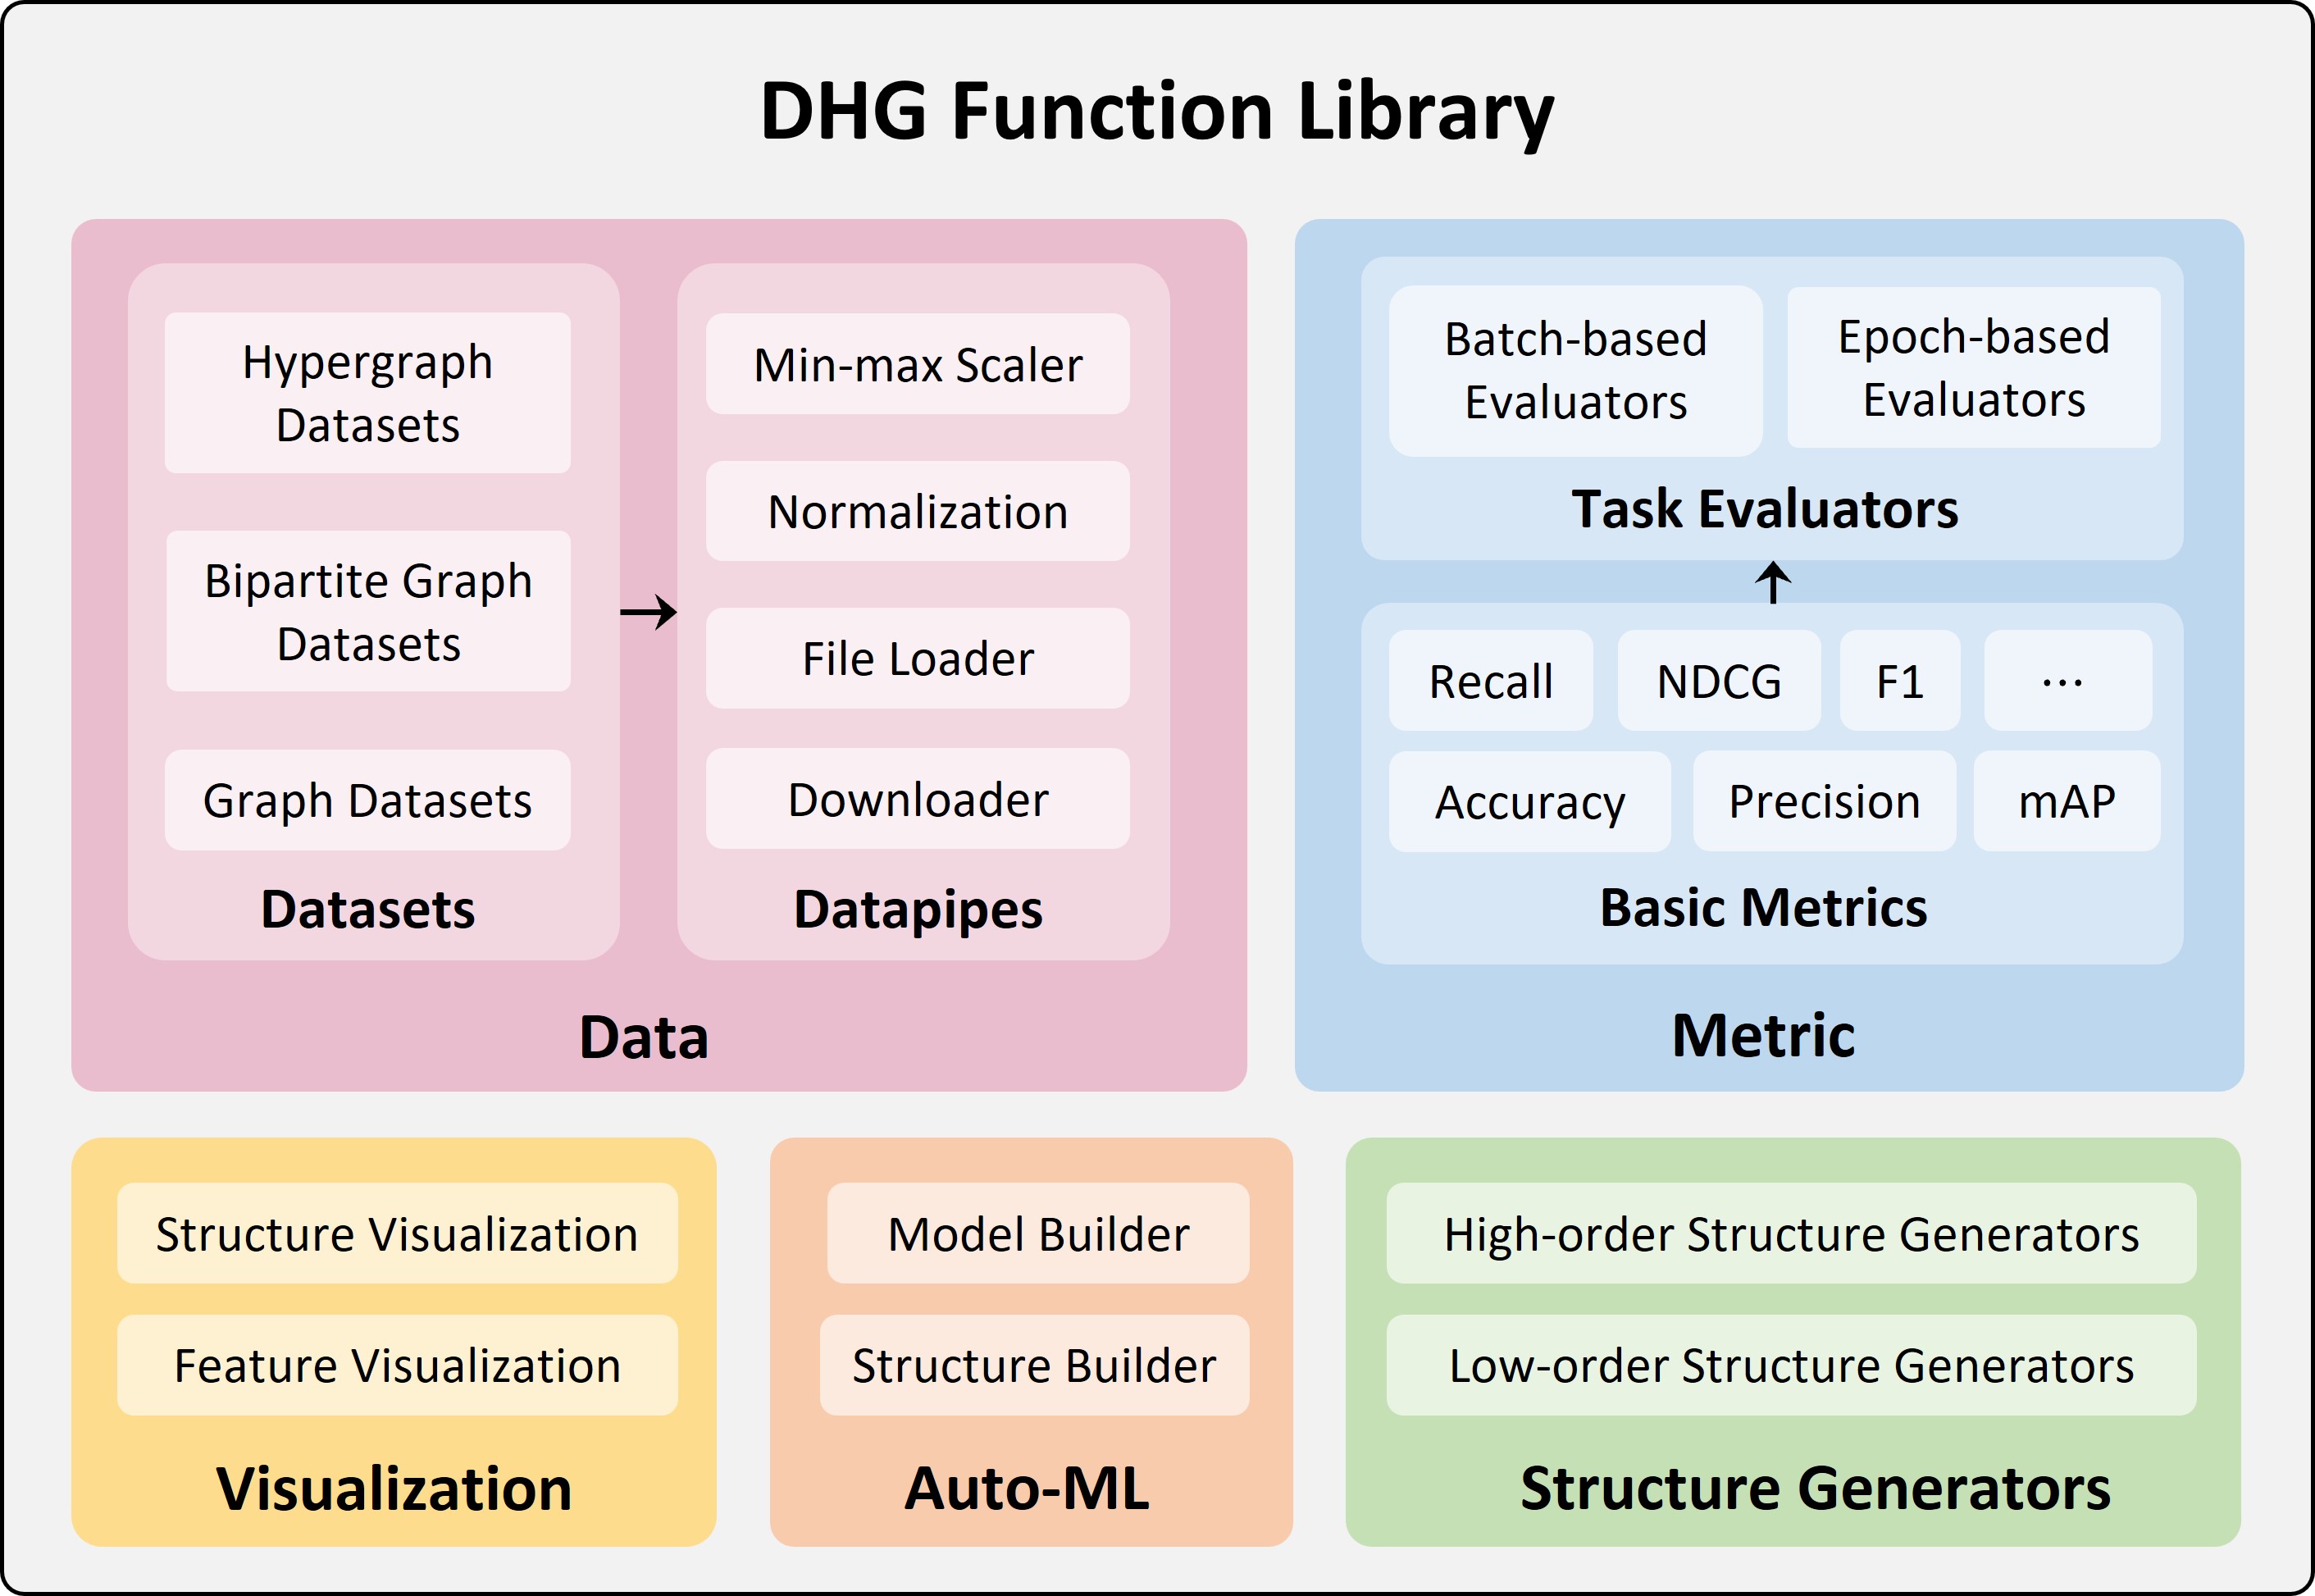 Framework of DHG Function Library